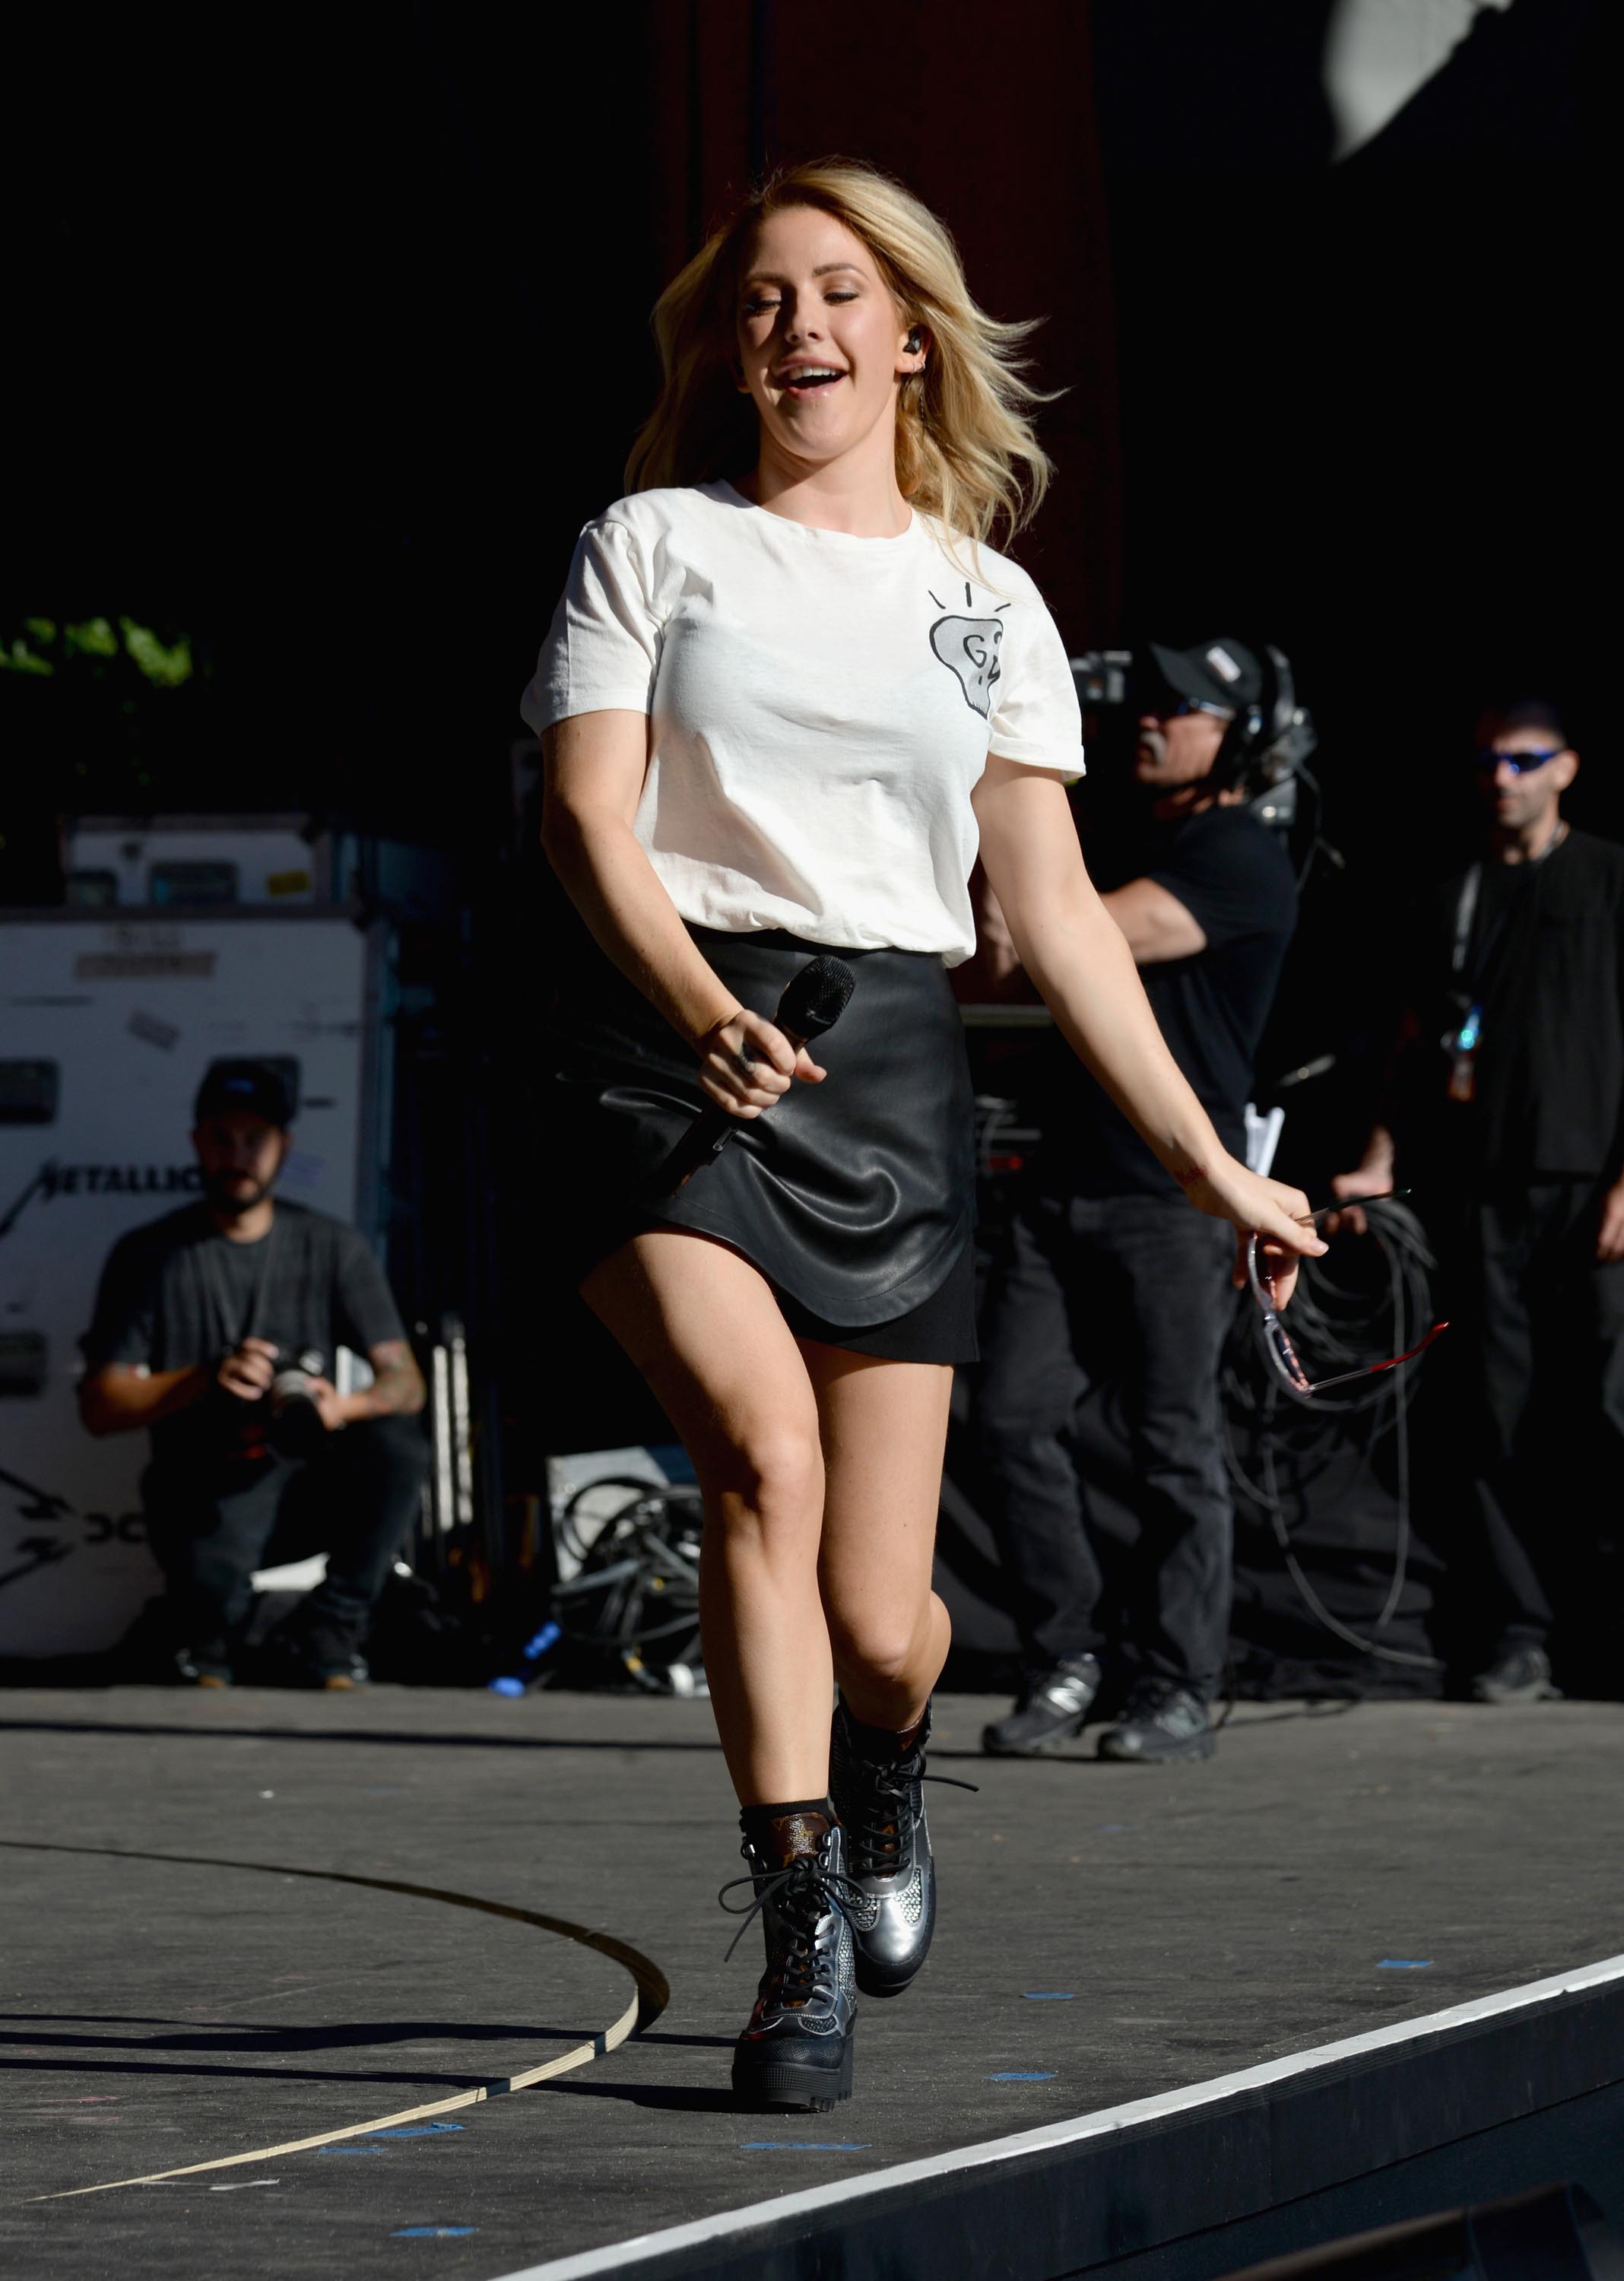 Ellie Goulding performing at Global Citizen Festival